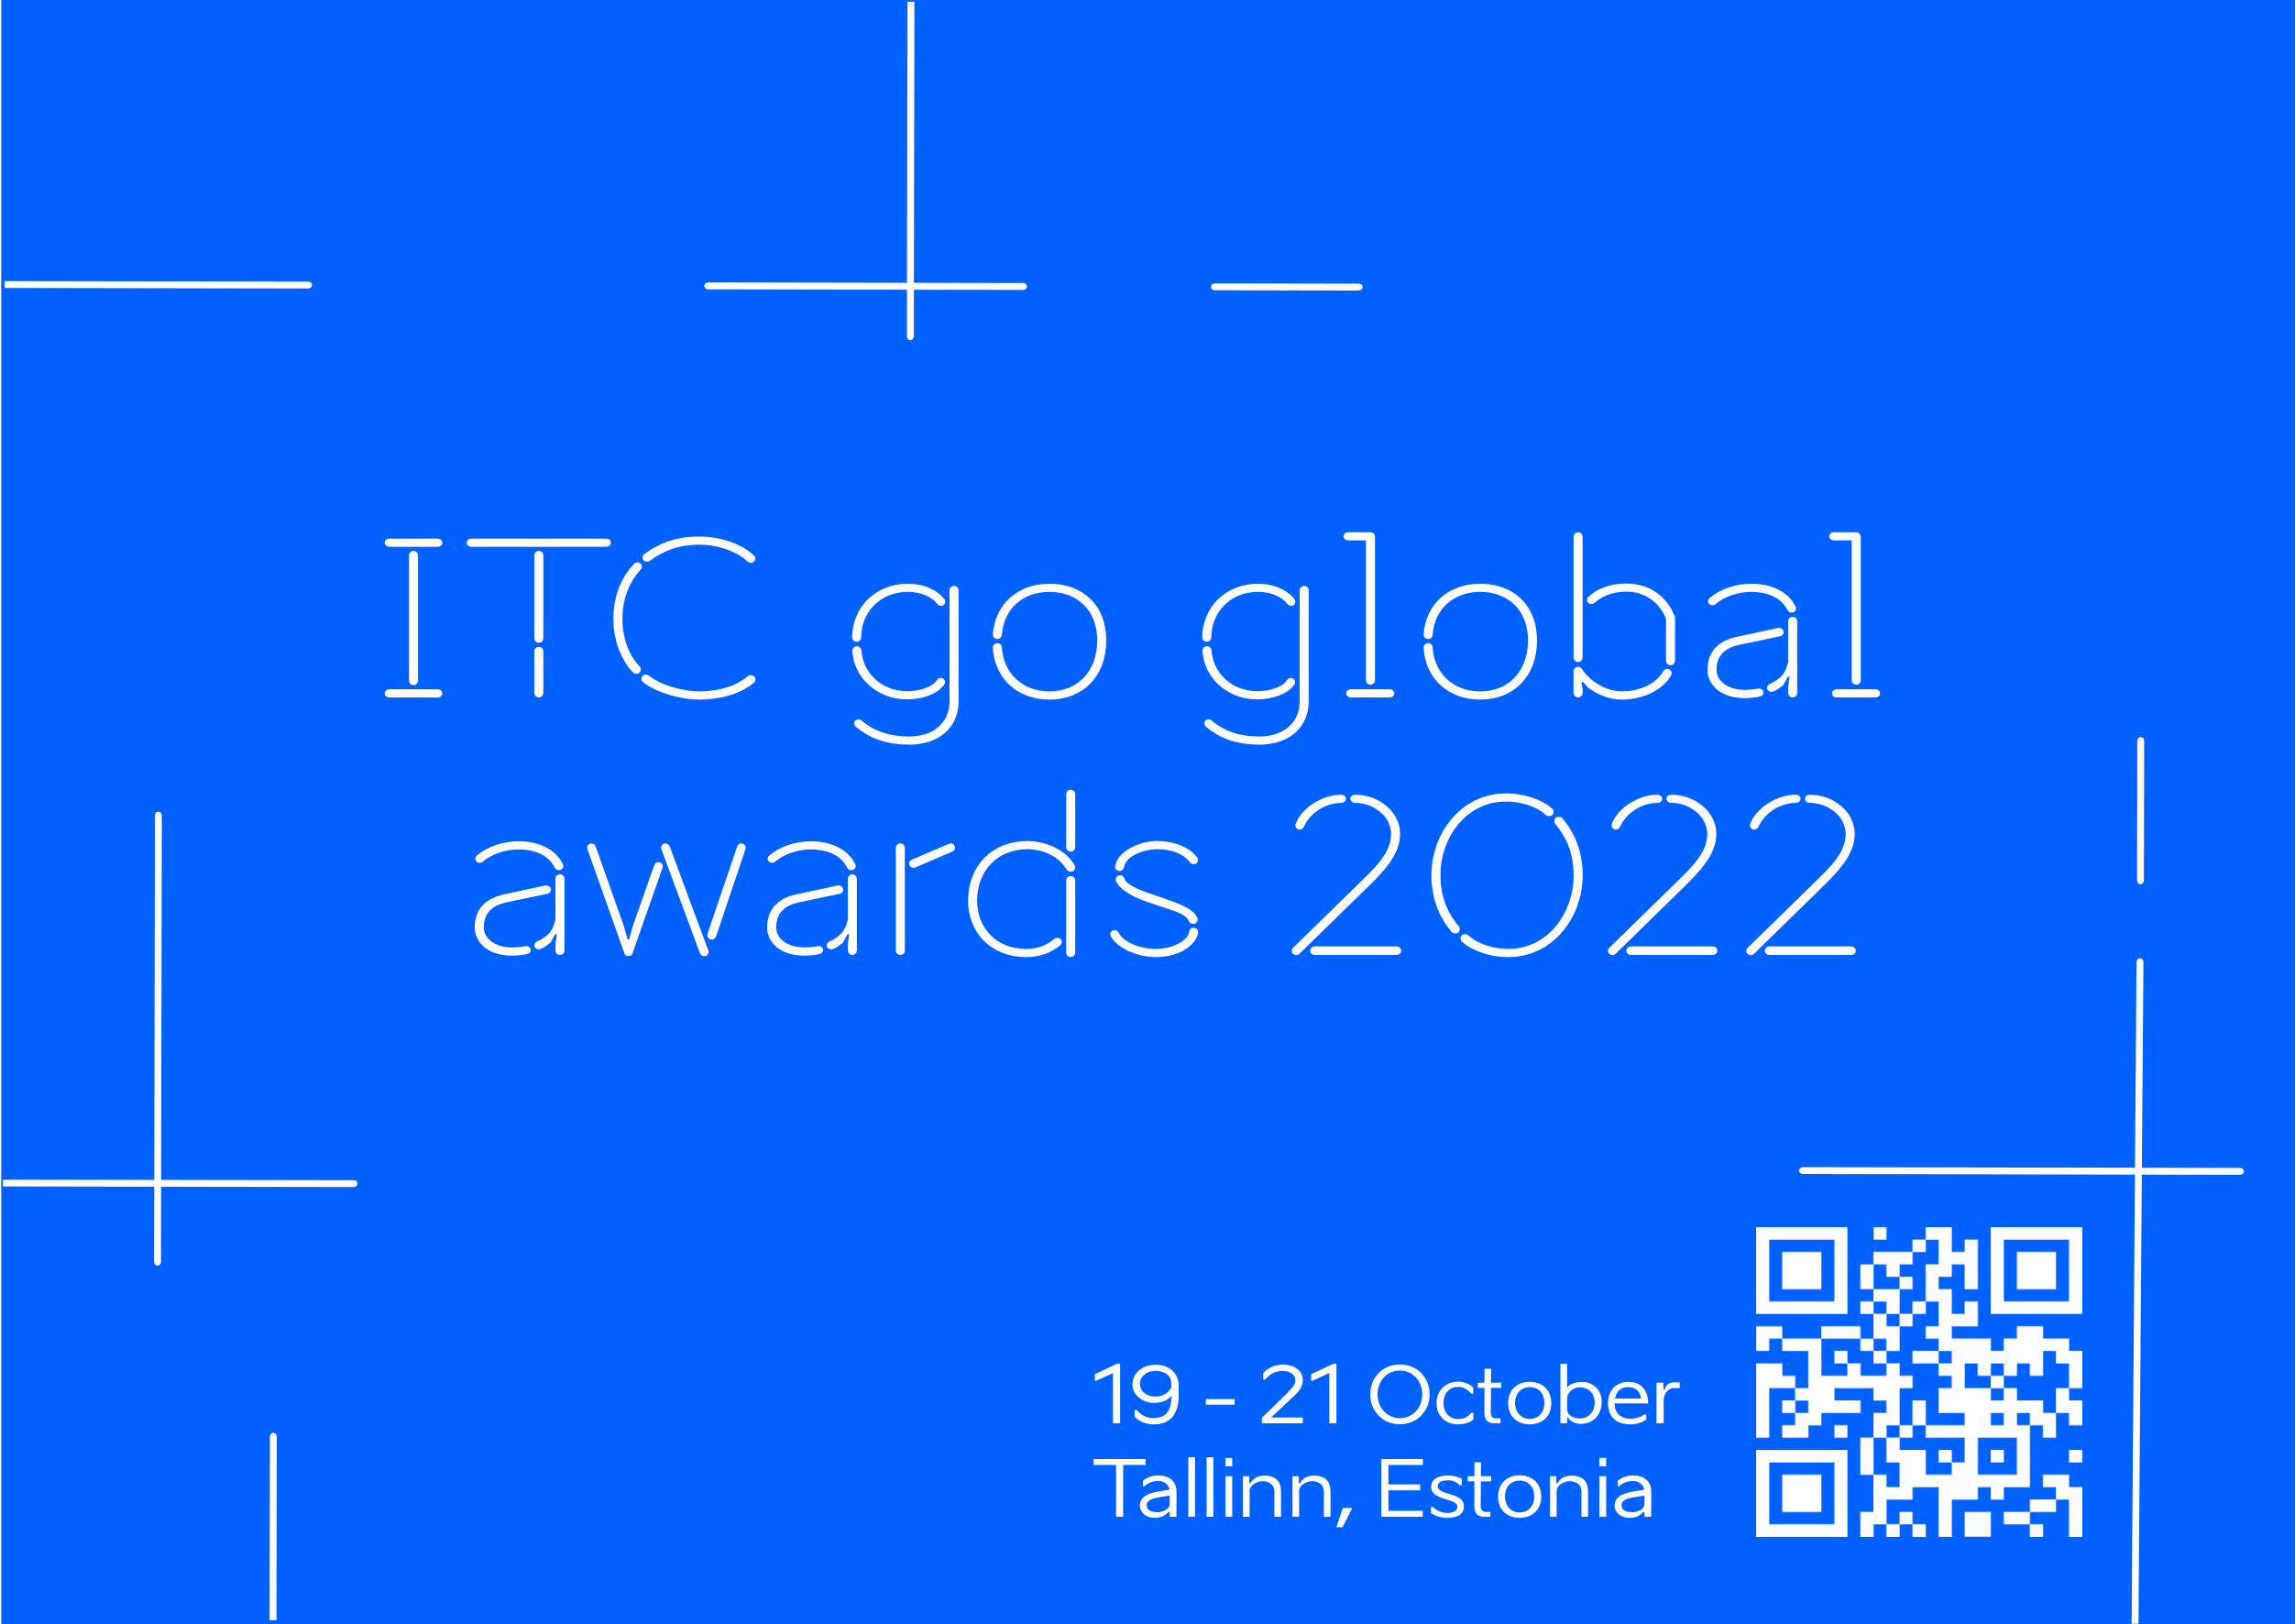 Go Global Awards 2022, Tallinn, Harju, Estonia